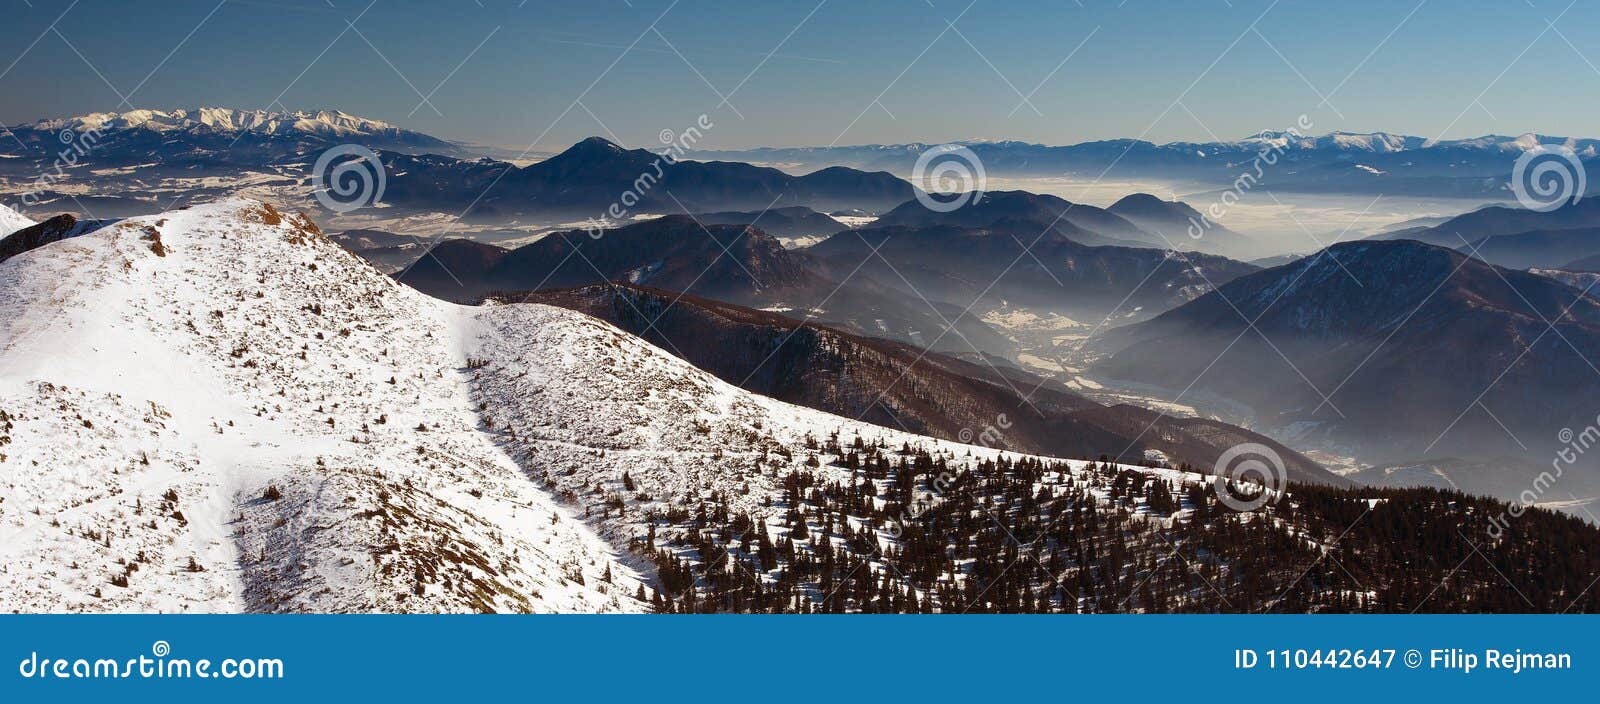 slovak landscape in winter, panorama